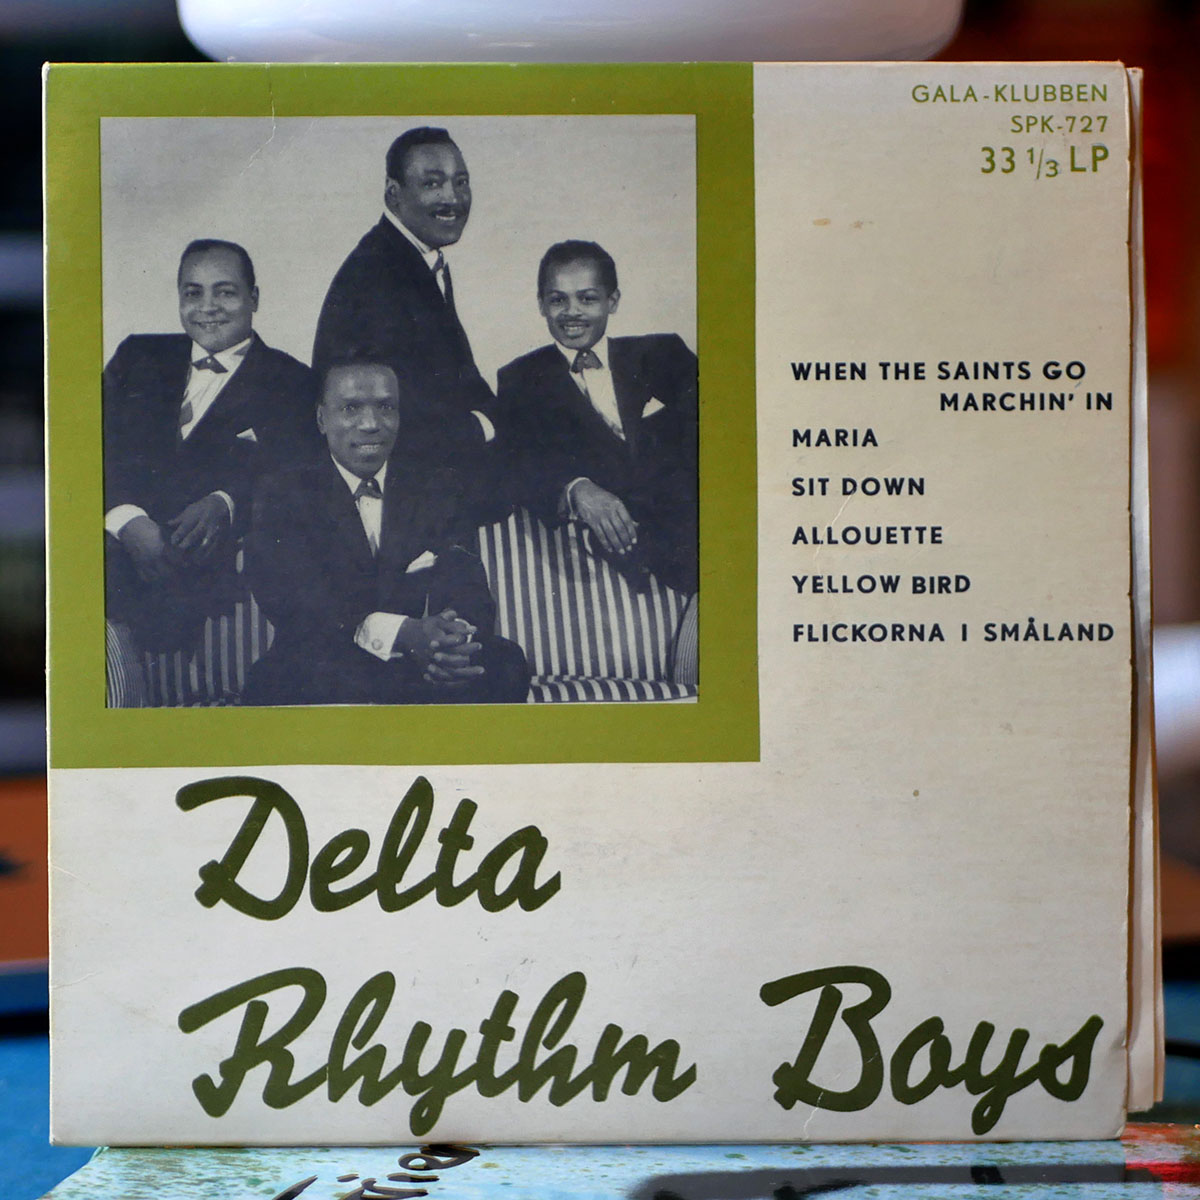 Delta Rhythm Boys – S/T [7” EP, 1964]